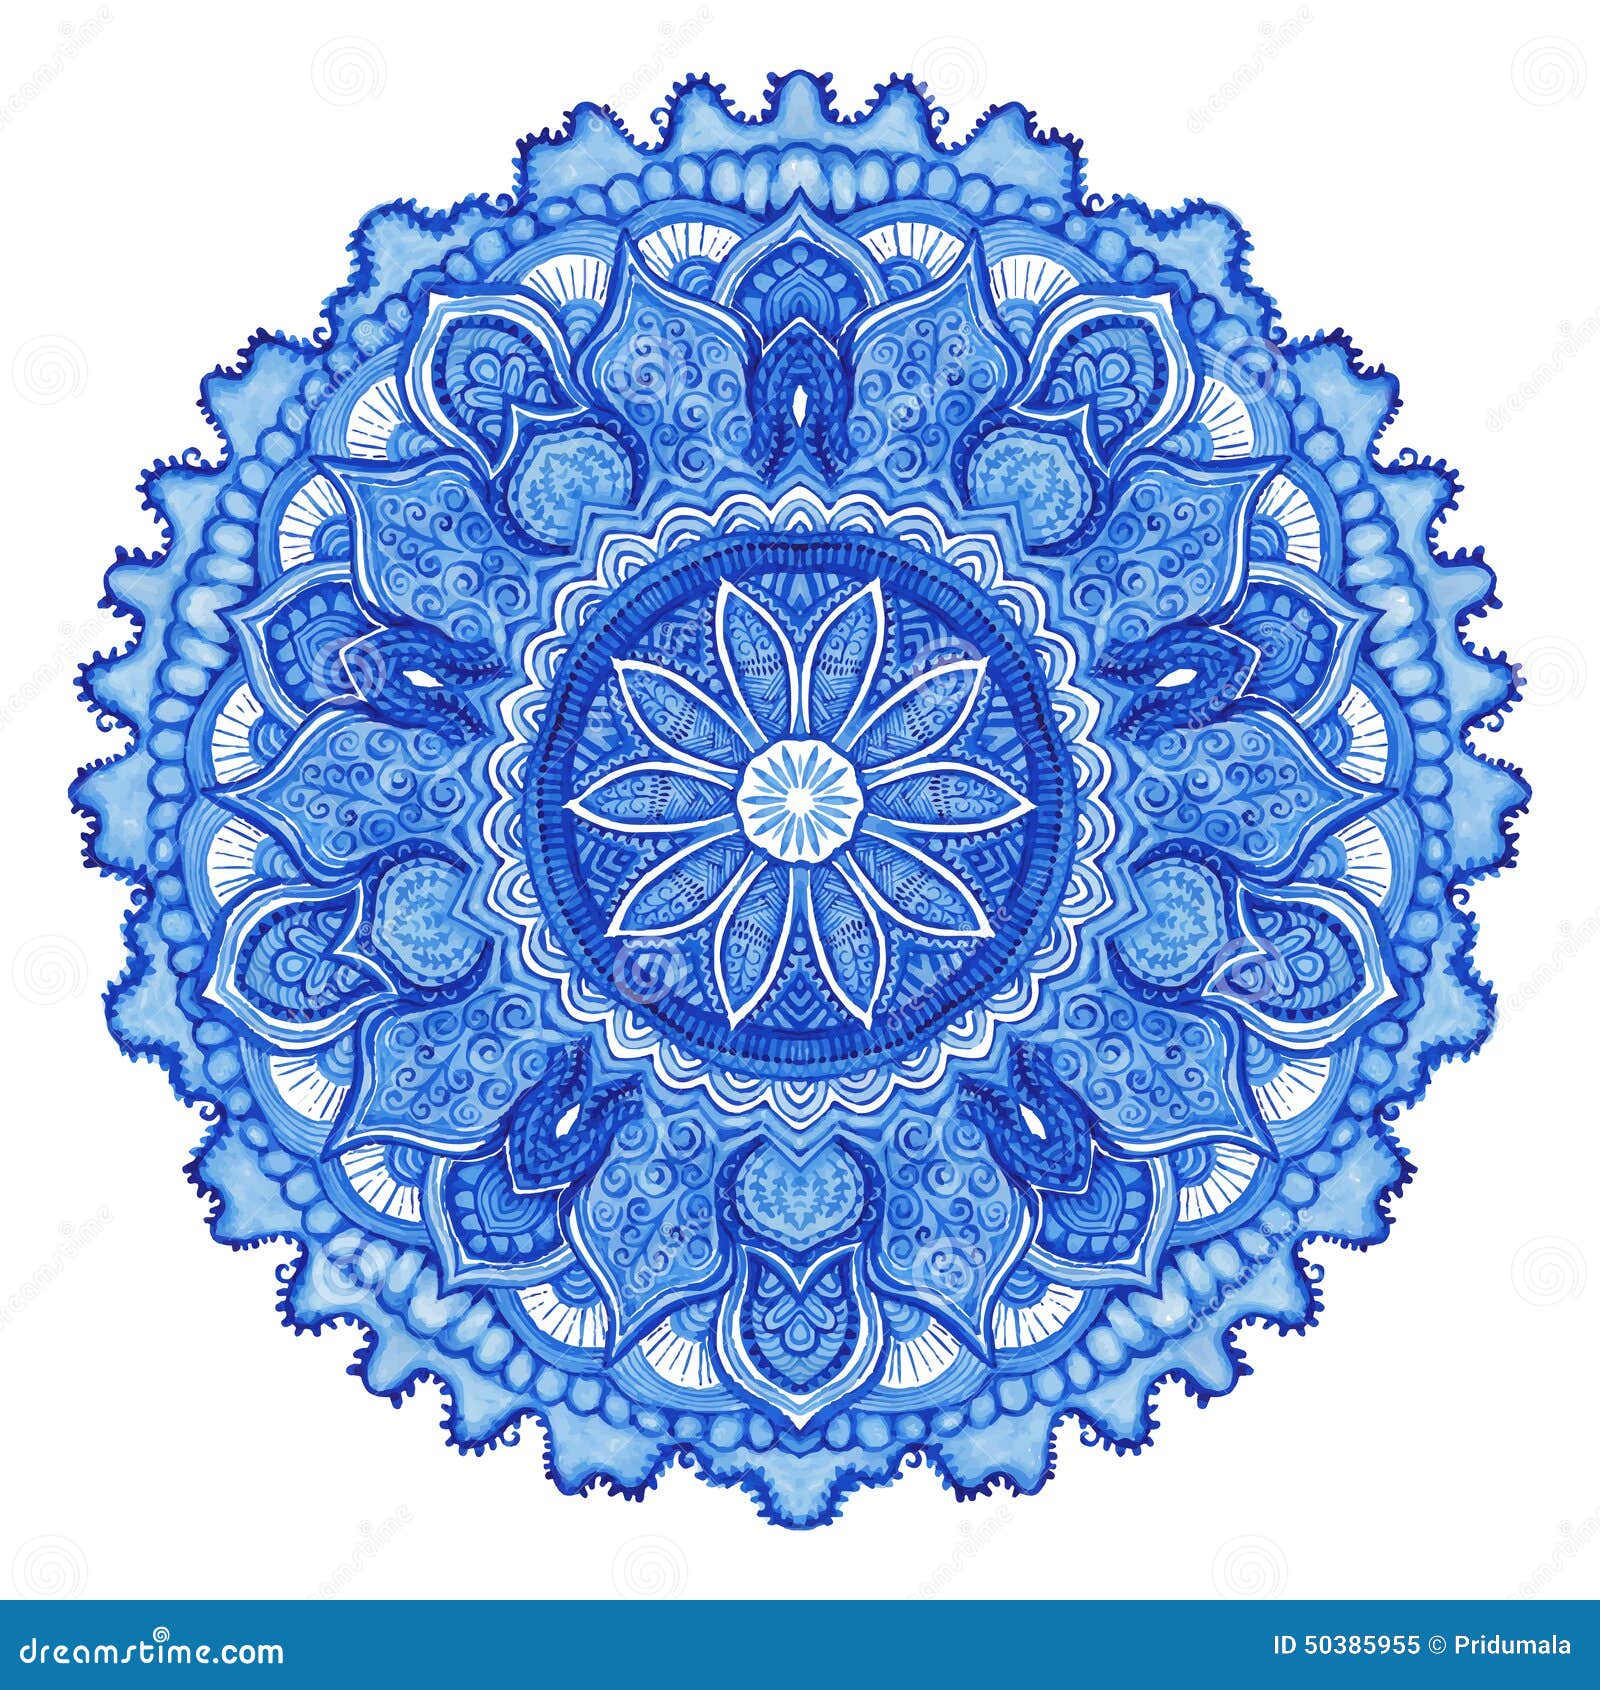 watercolor  gzhel. doily round lace pattern, circle backgr